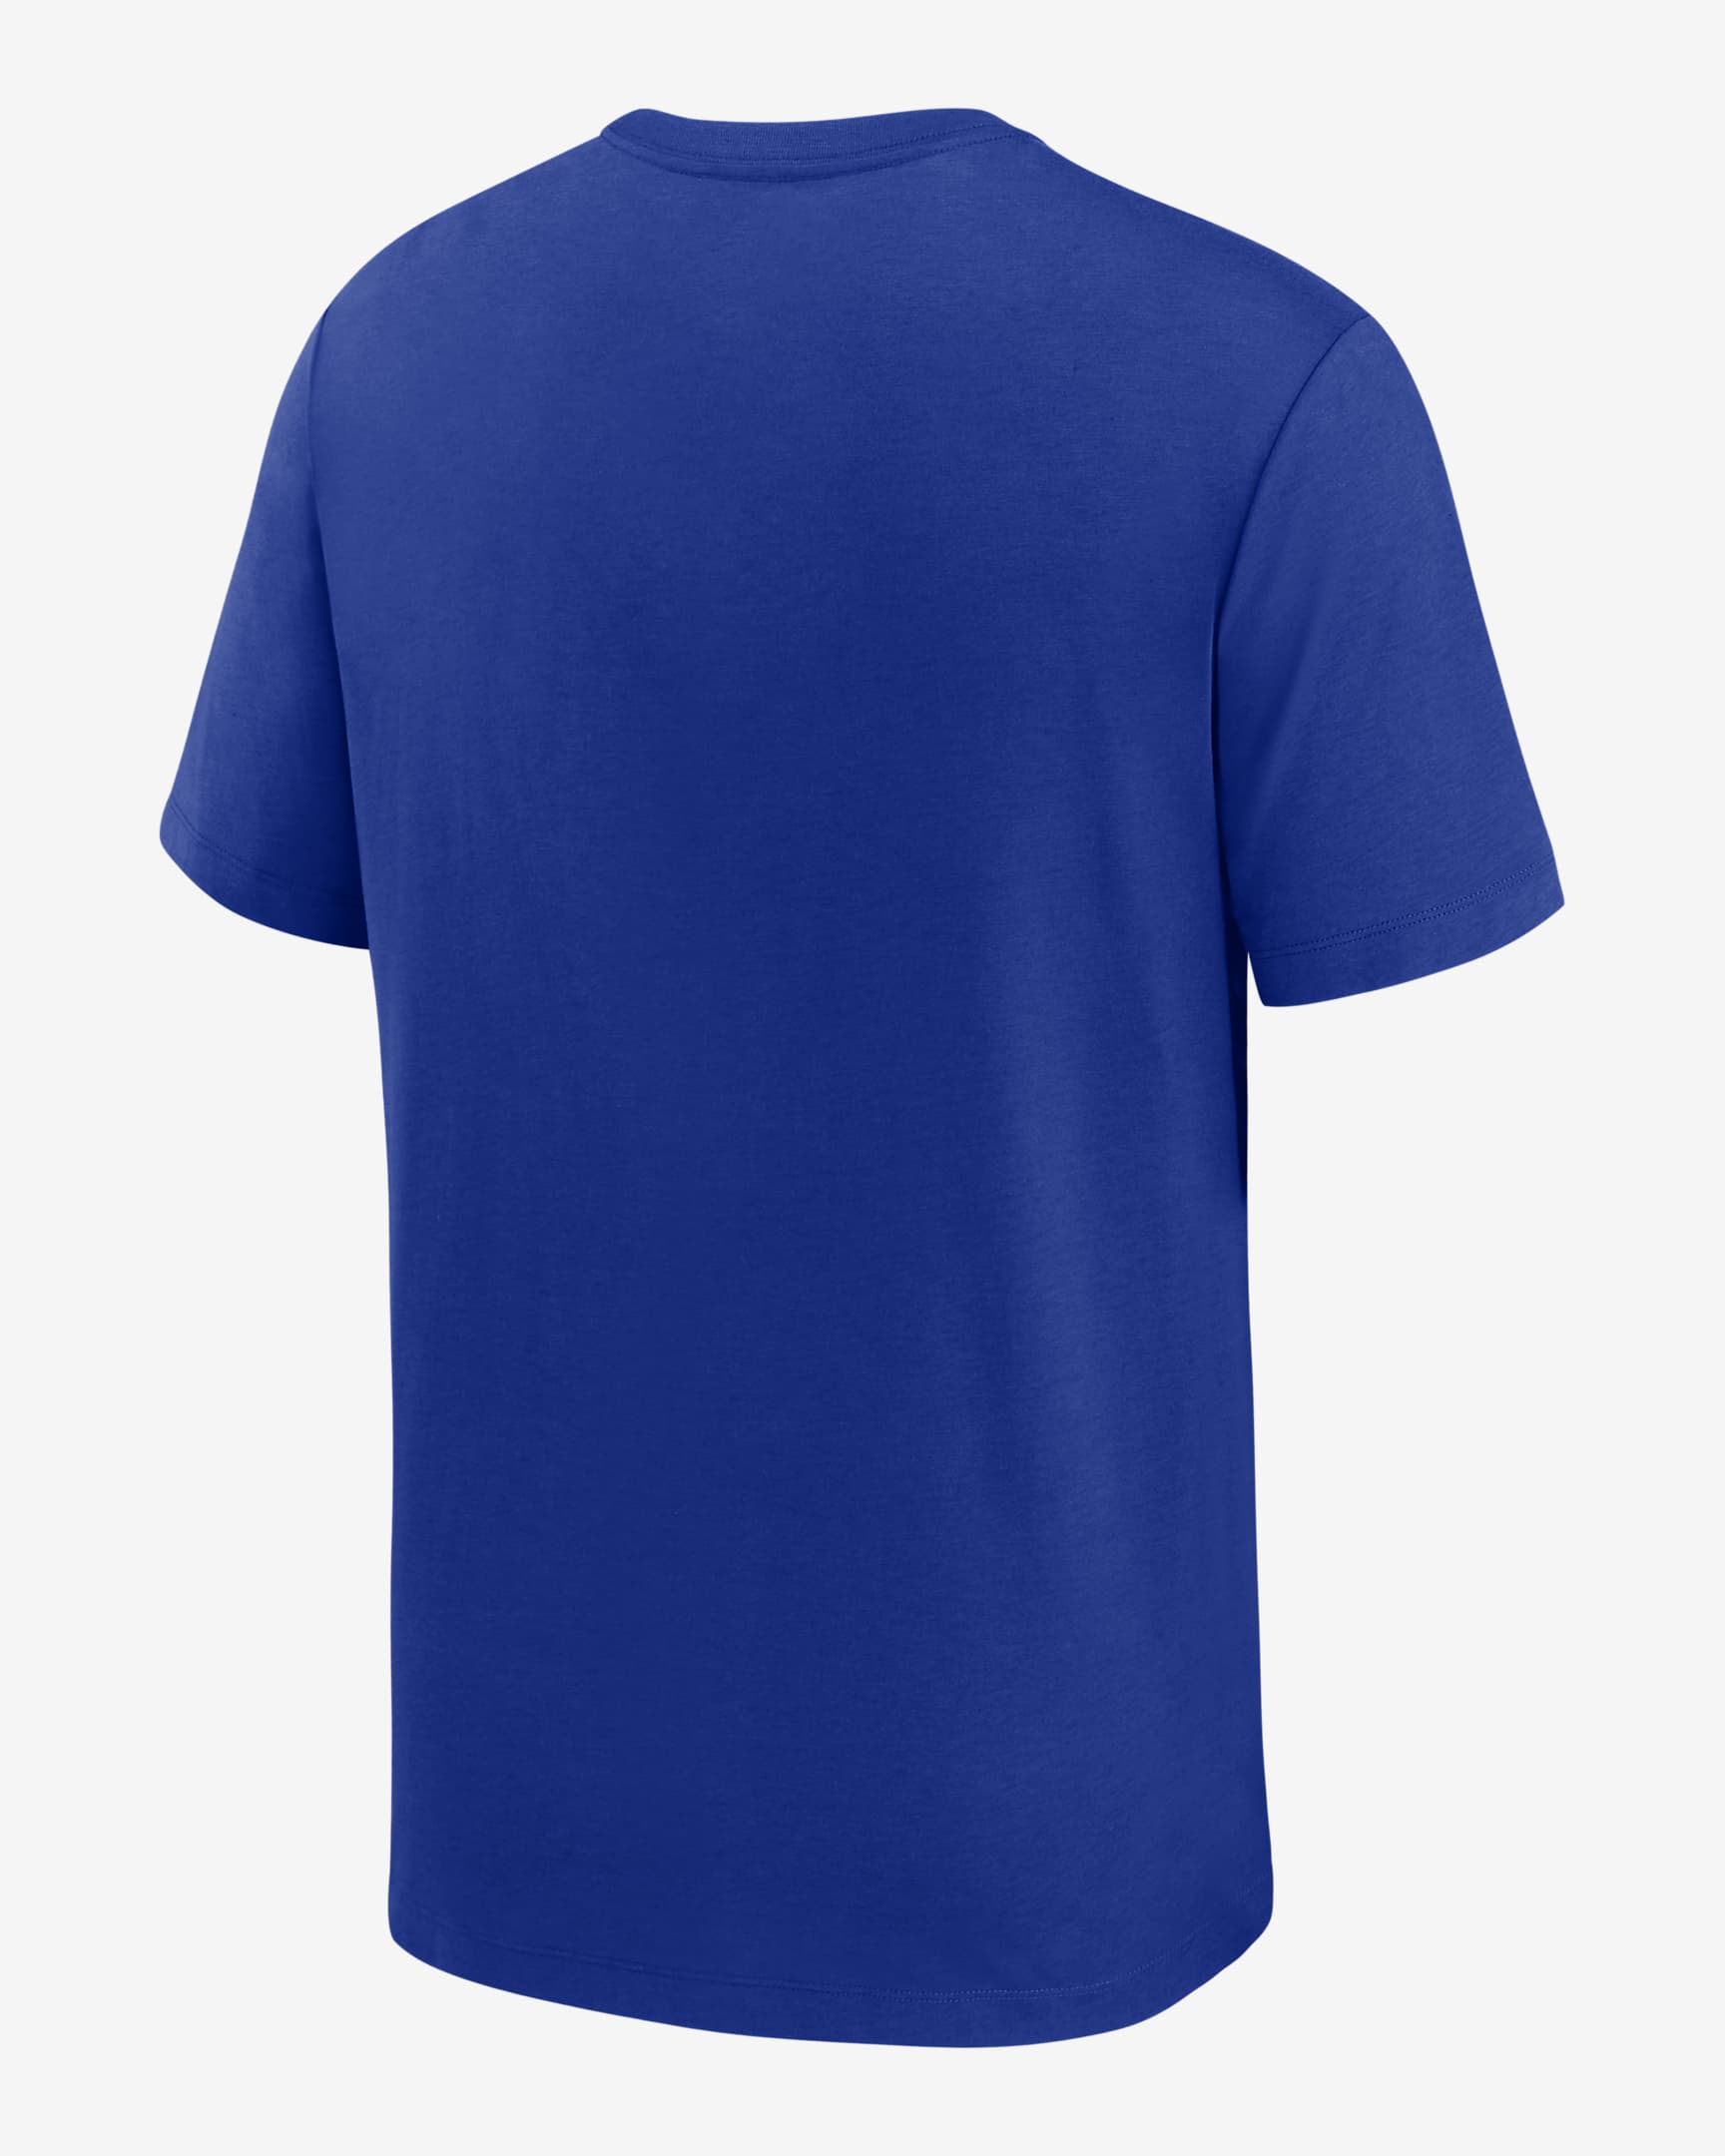 Nike Historic (NFL Patriots) Men's Tri-Blend T-Shirt. Nike HU